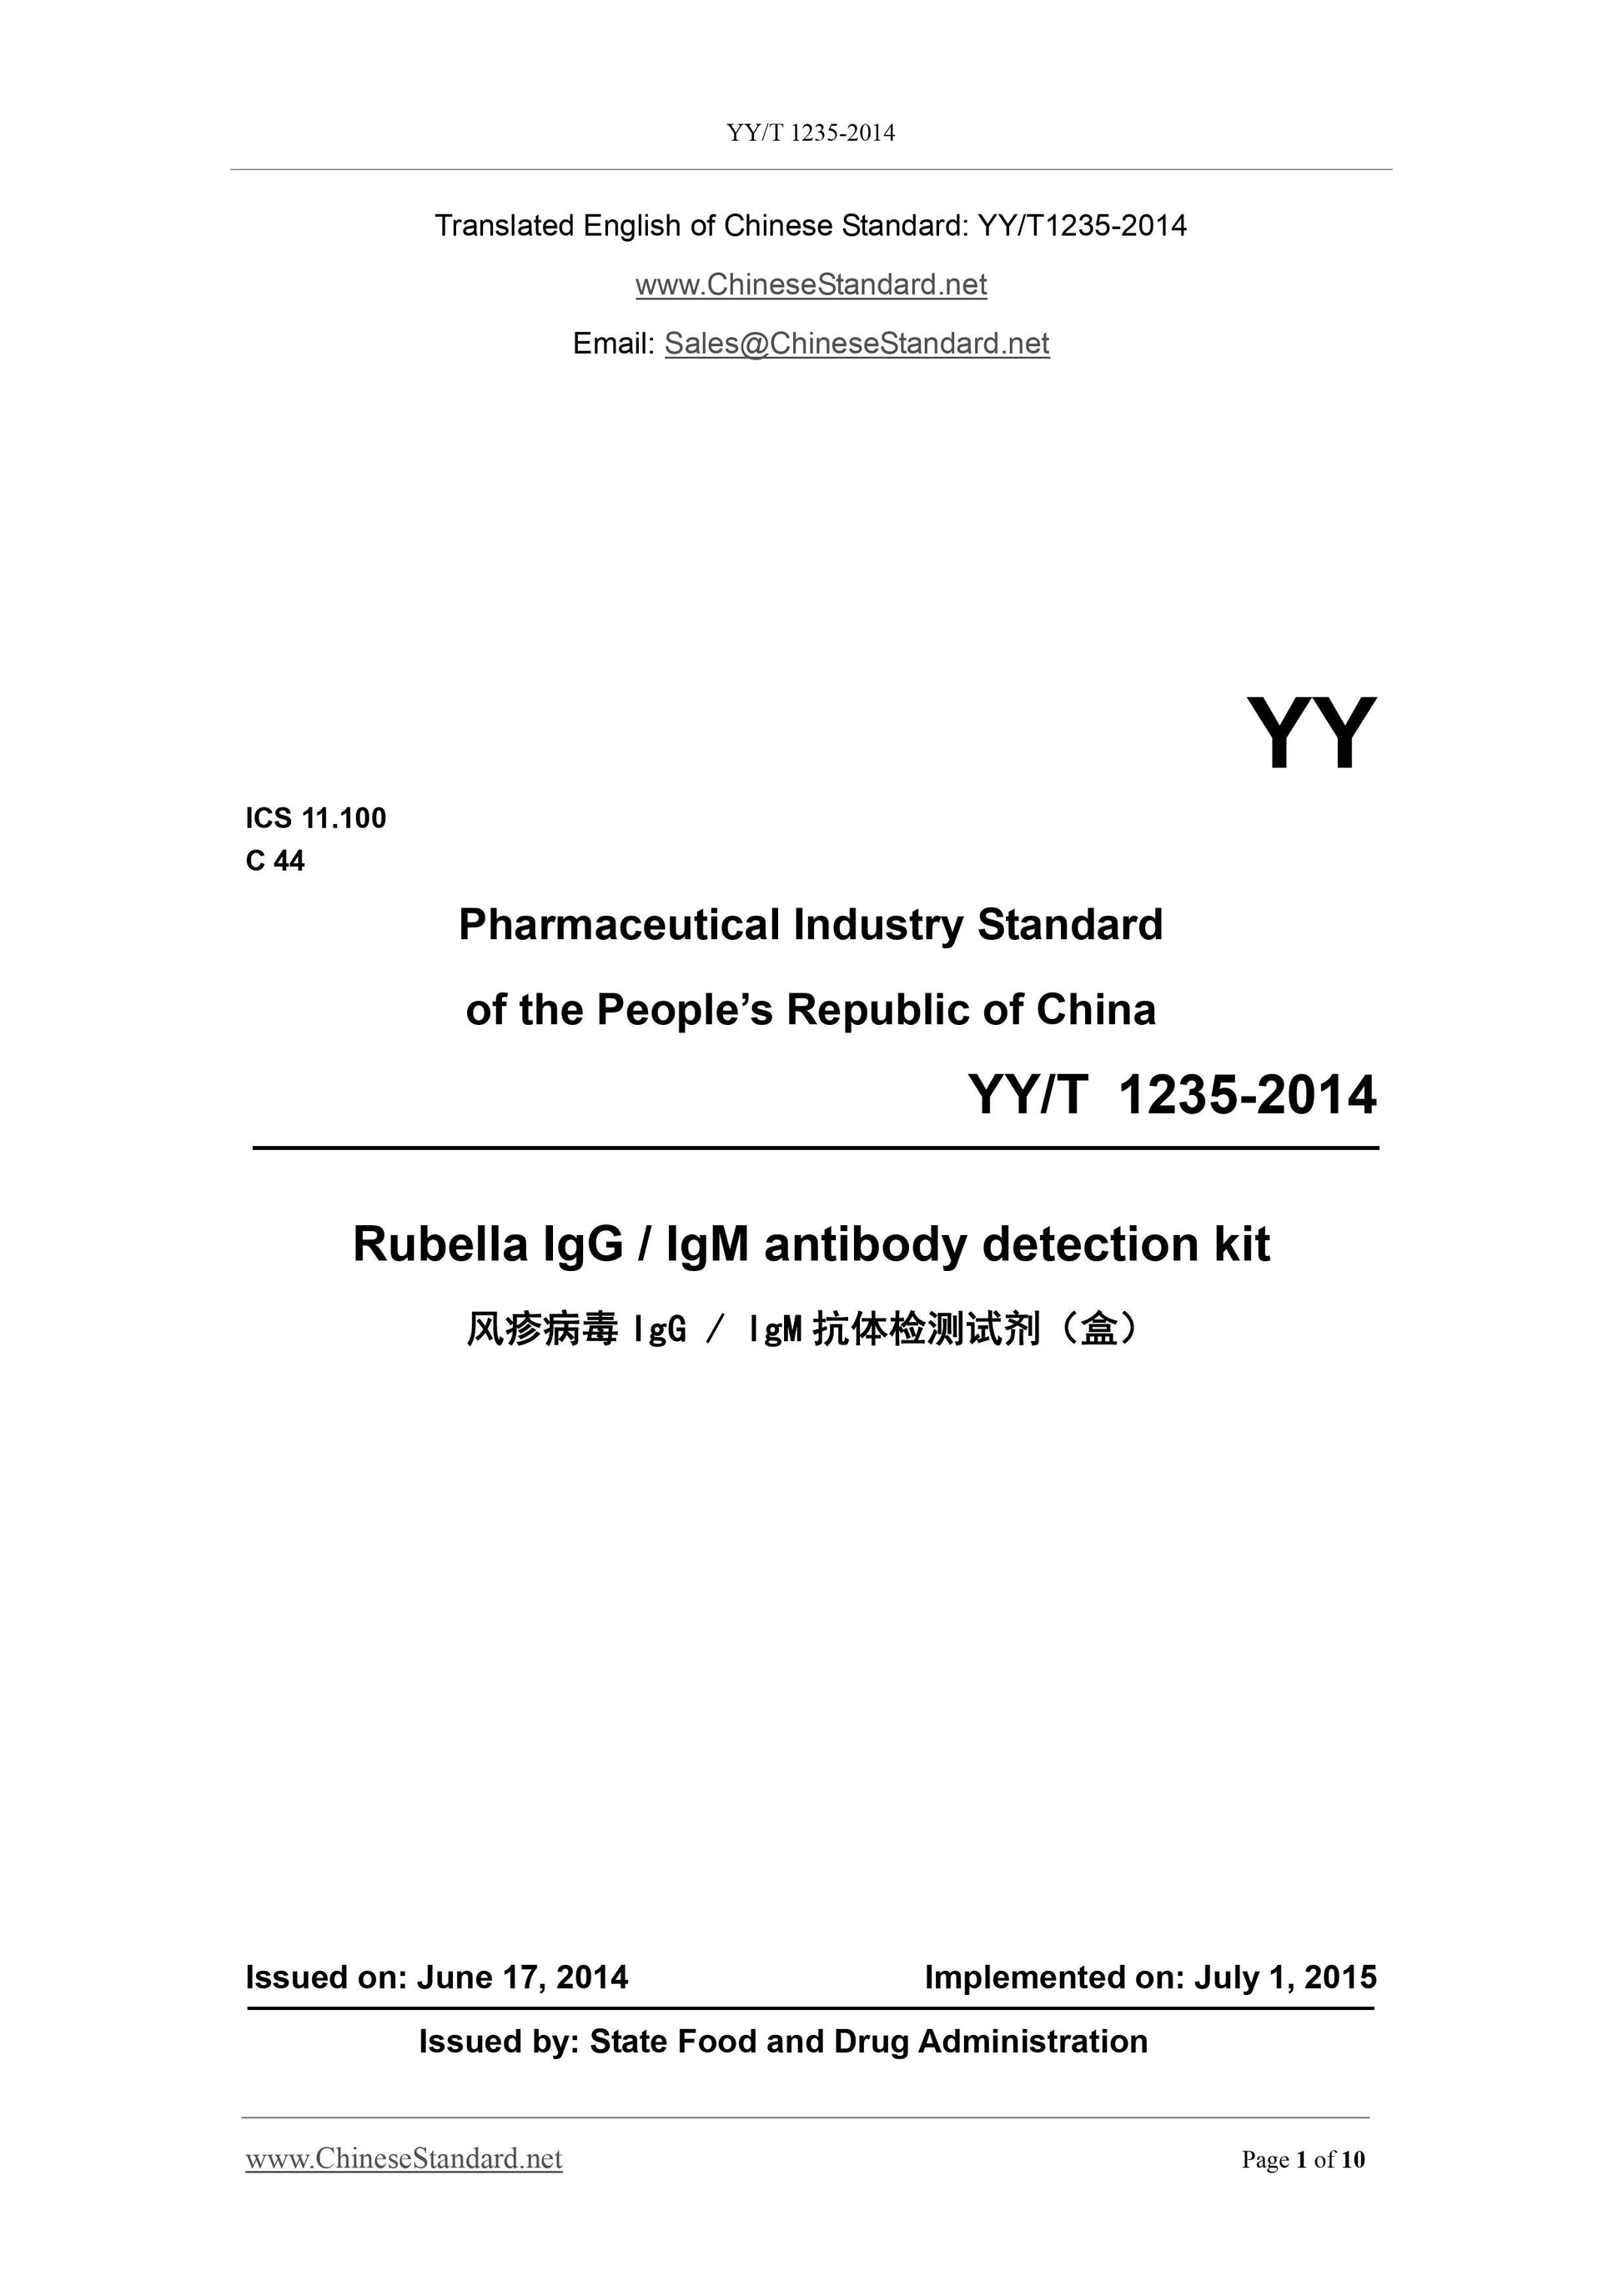 YY/T 1235-2014 Page 1